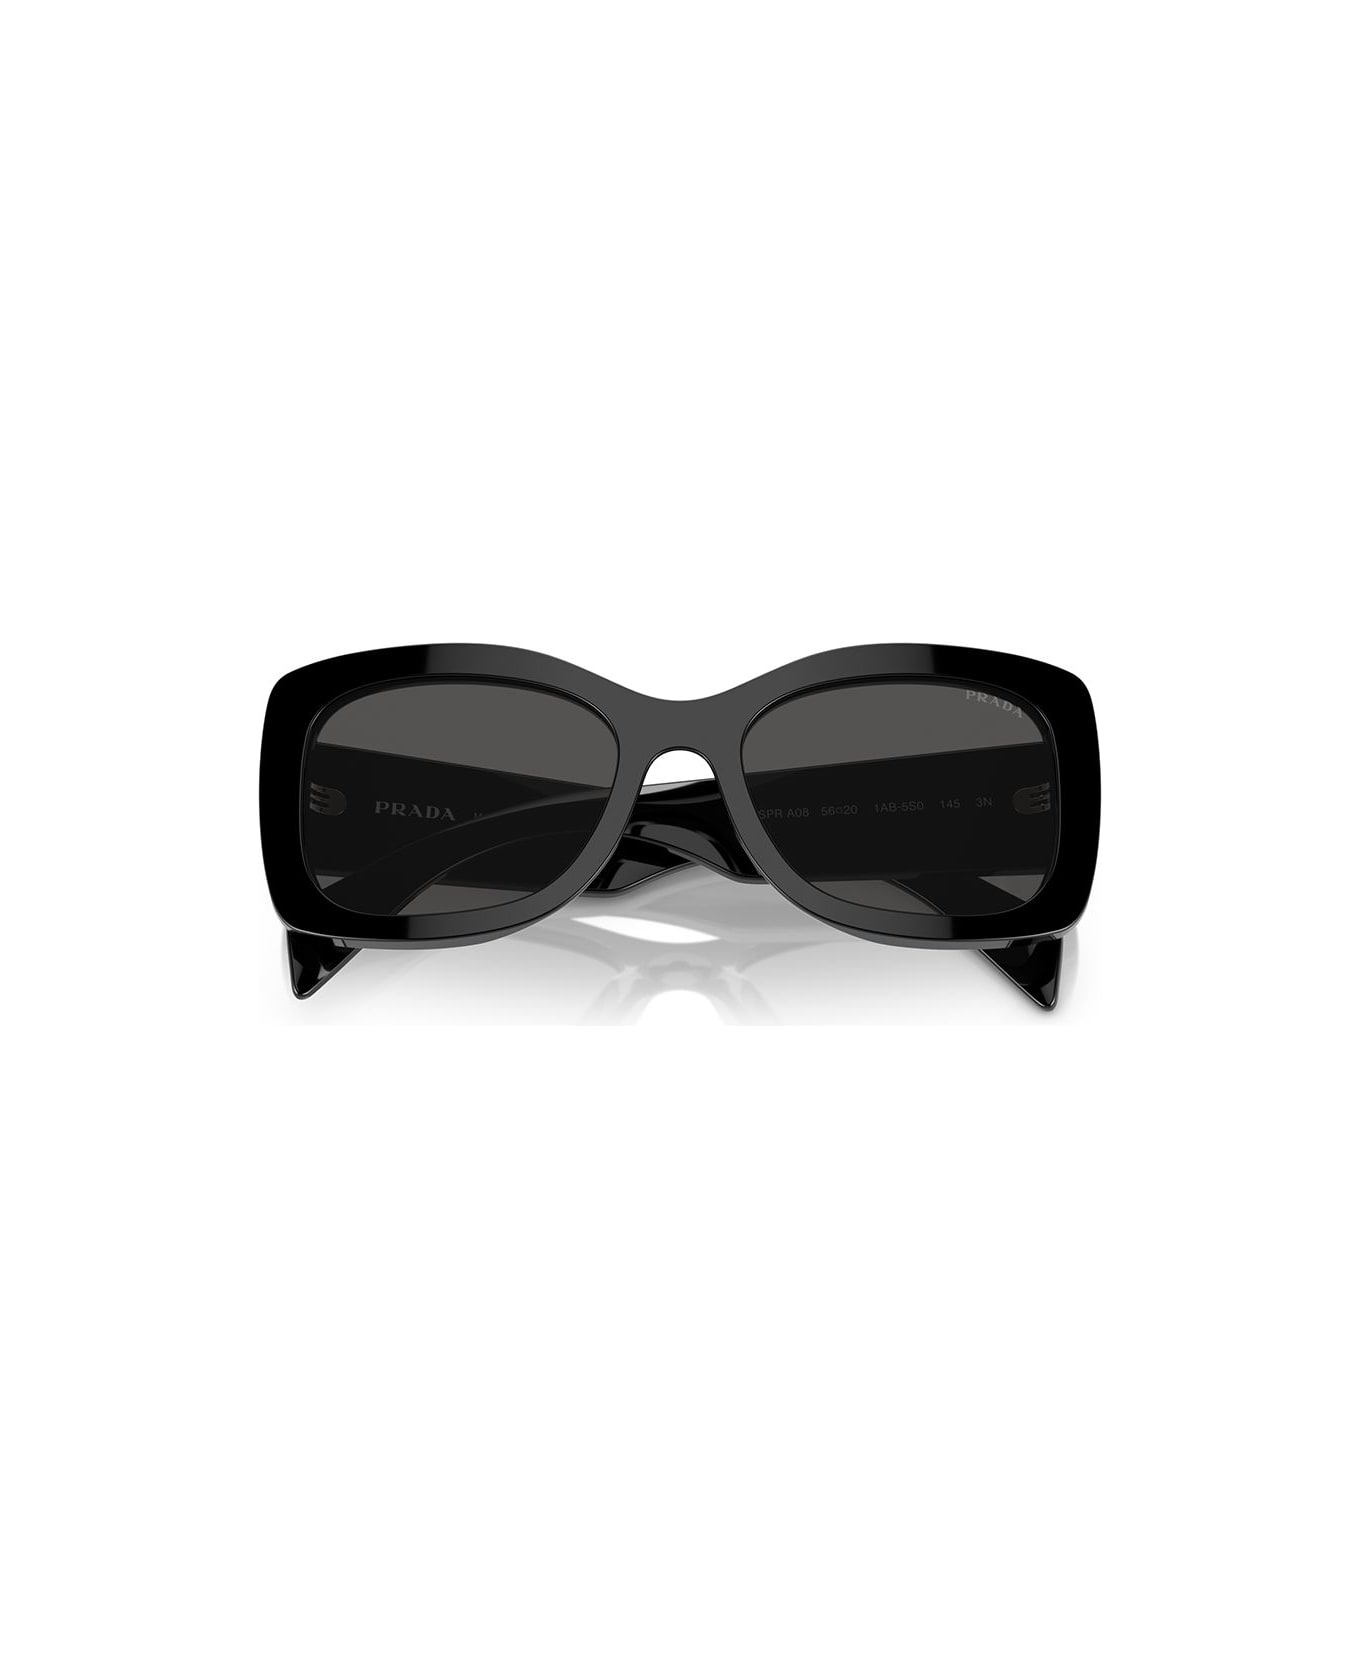 Prada Eyewear Sunglasses - 1AB5S0